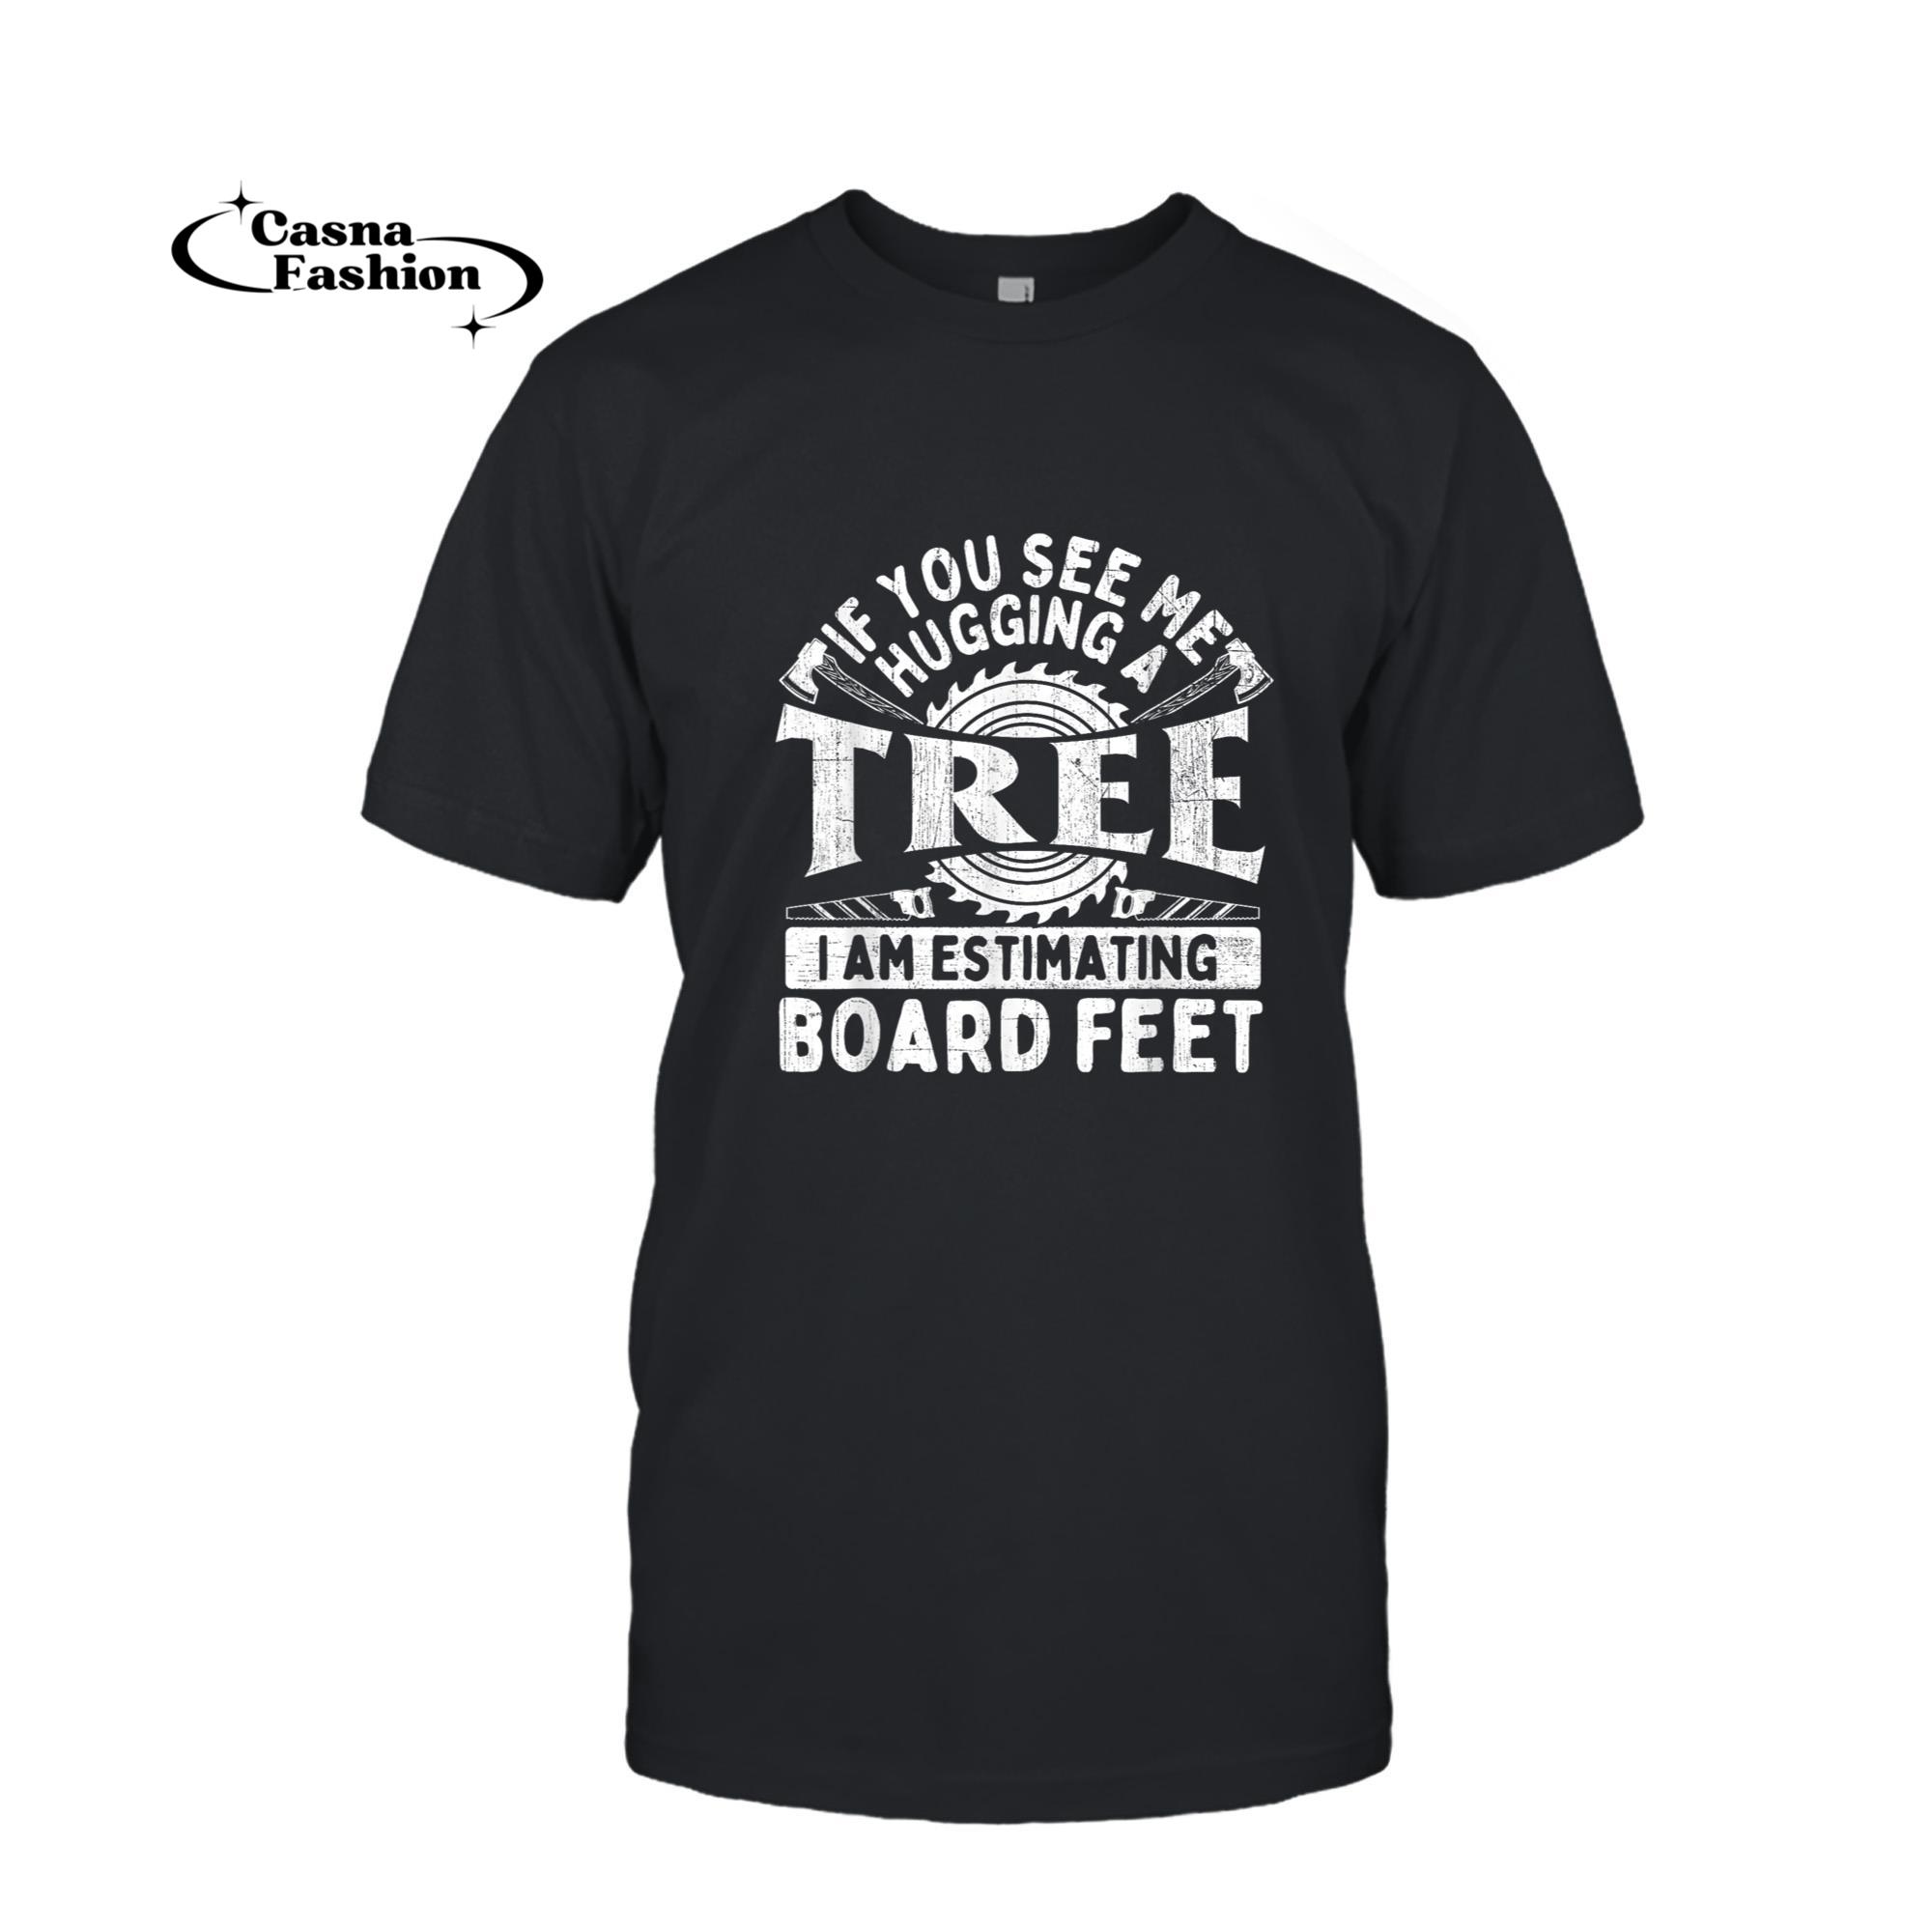 casnafashion_T-shirt_I Am Estimating Board Feet - Woodworker Carpenter Firewood T-Shirt_T-shirt_Black